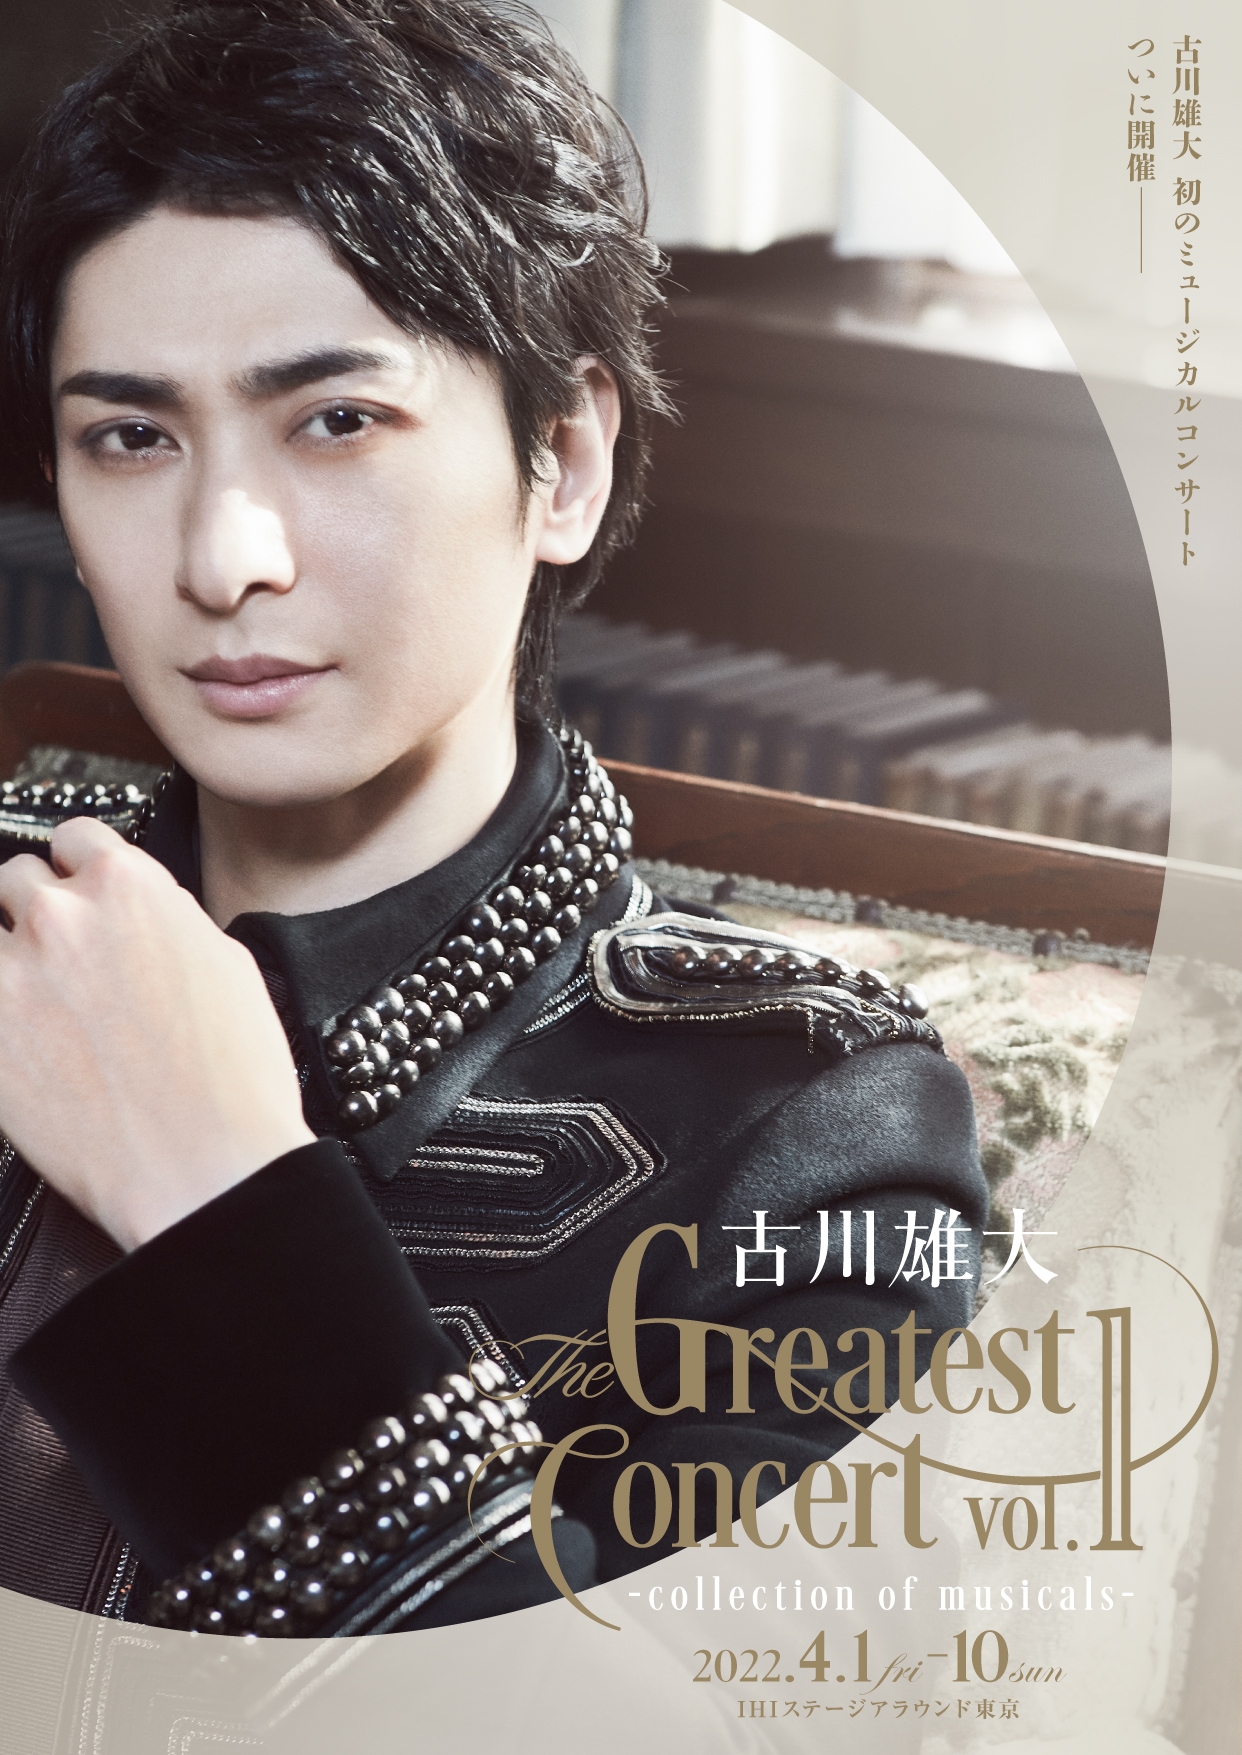 古川雄大　Greatest Concert vol.1 Blu-ray 写真付き